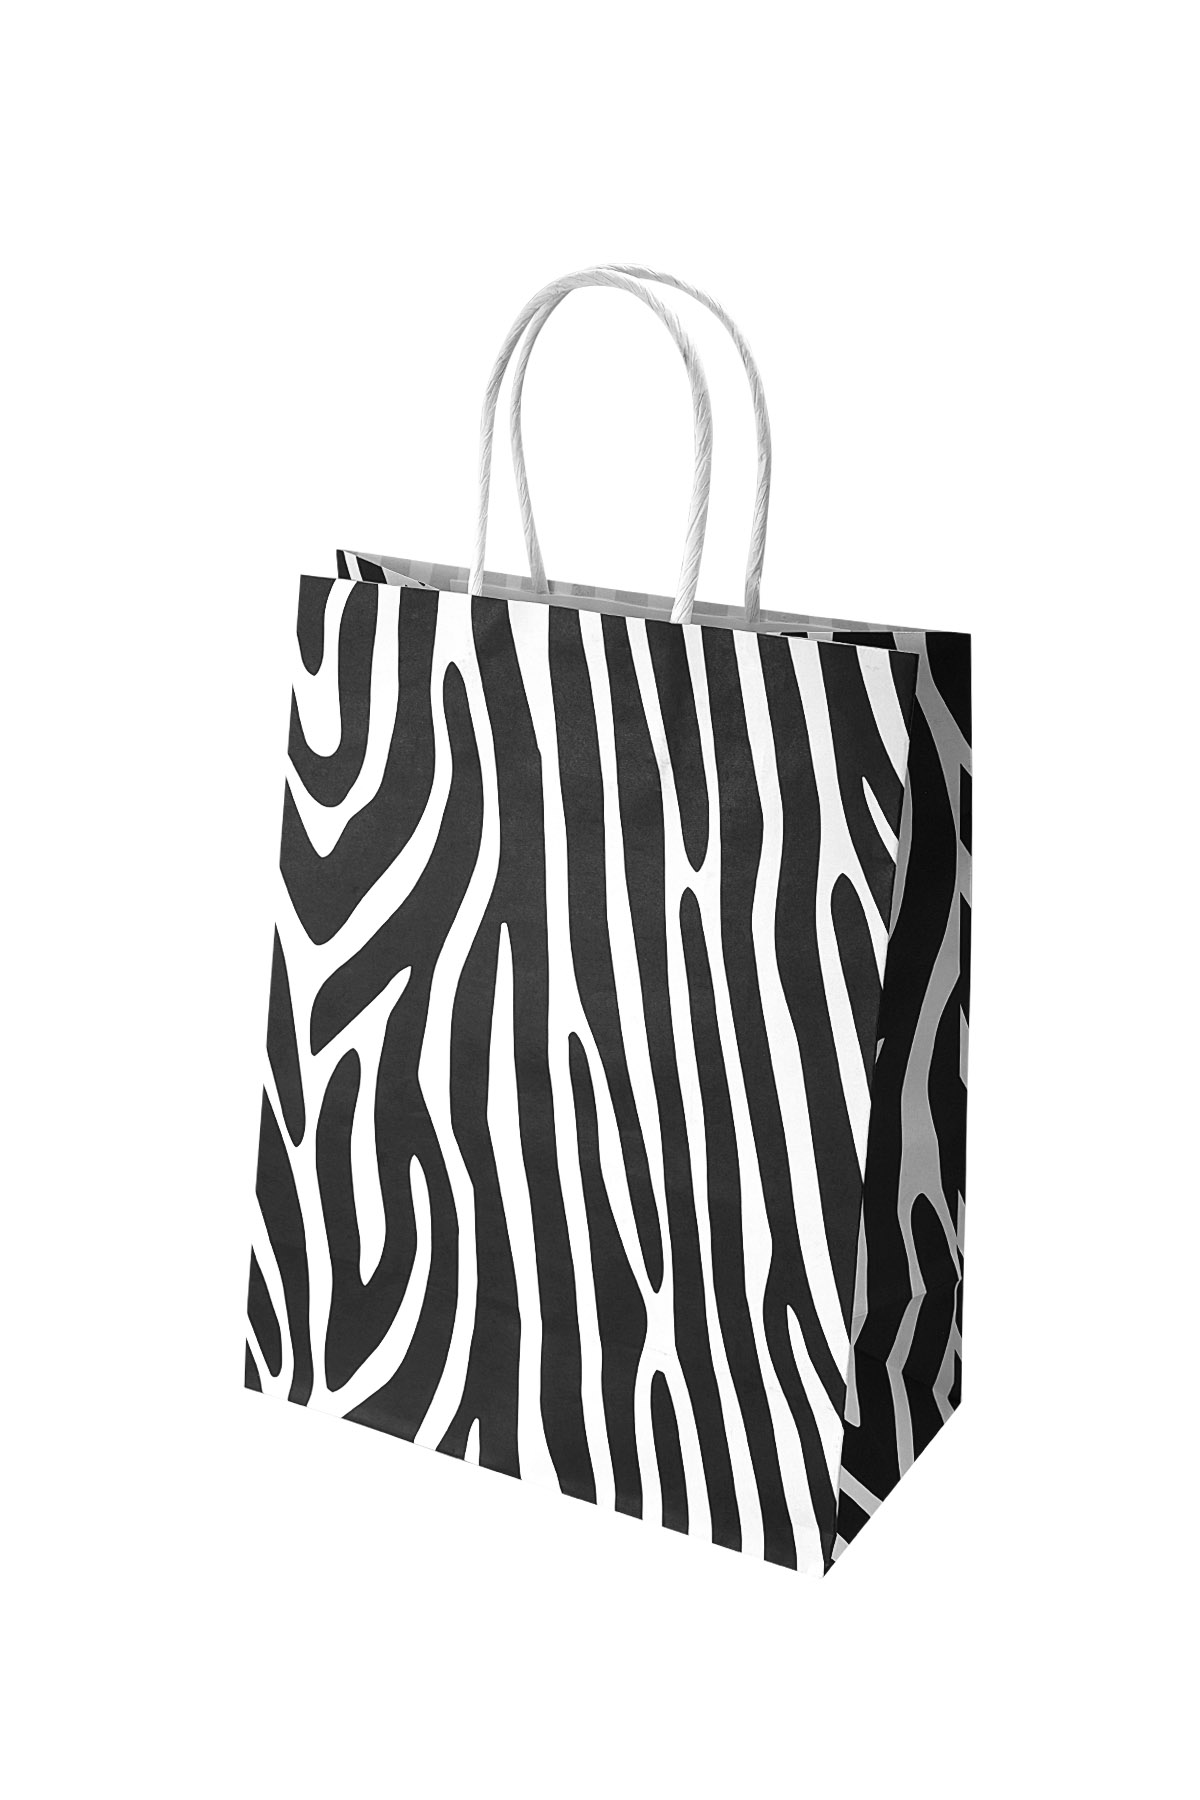 Bags zebra 50 pieces - black/white Paper h5 